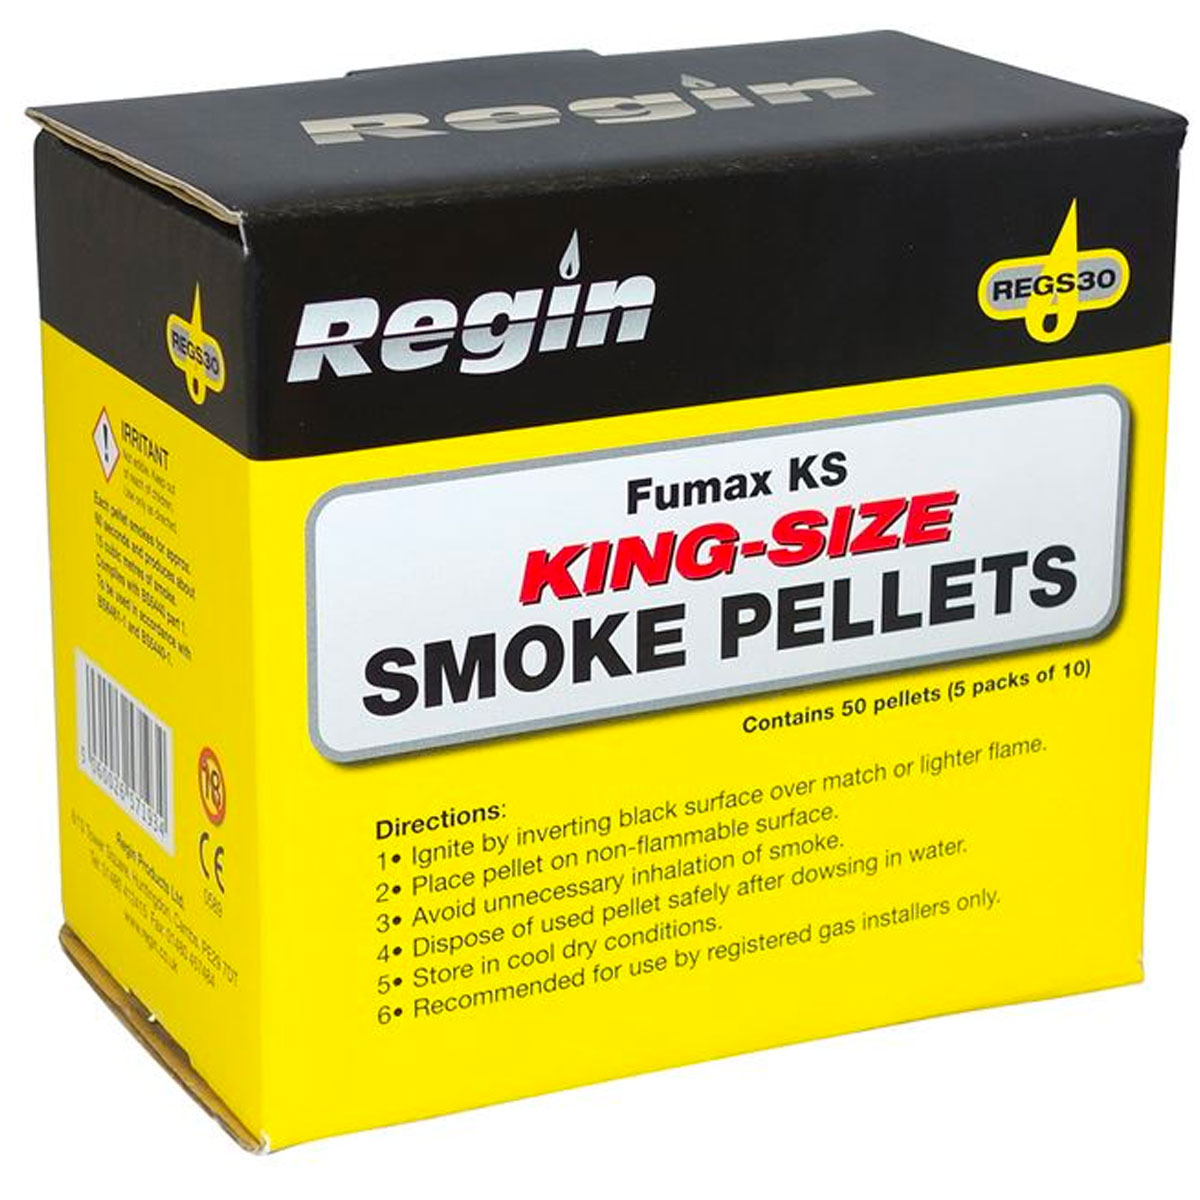 Fumax King Size Smoke Pellets - Pack of 50